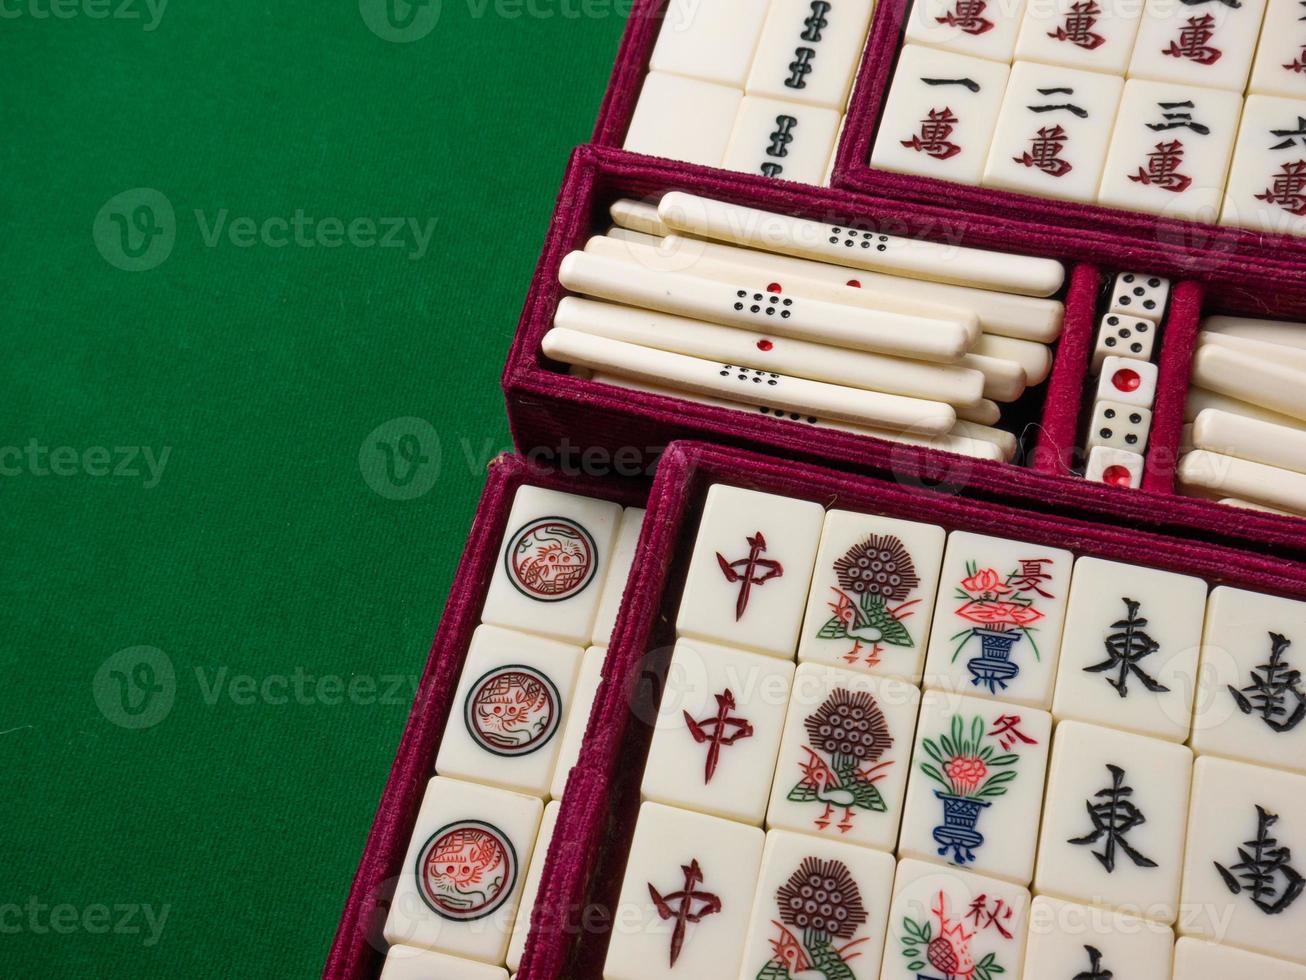 O mahjong na mesa antigo jogo de tabuleiro asiático fecha a imagem